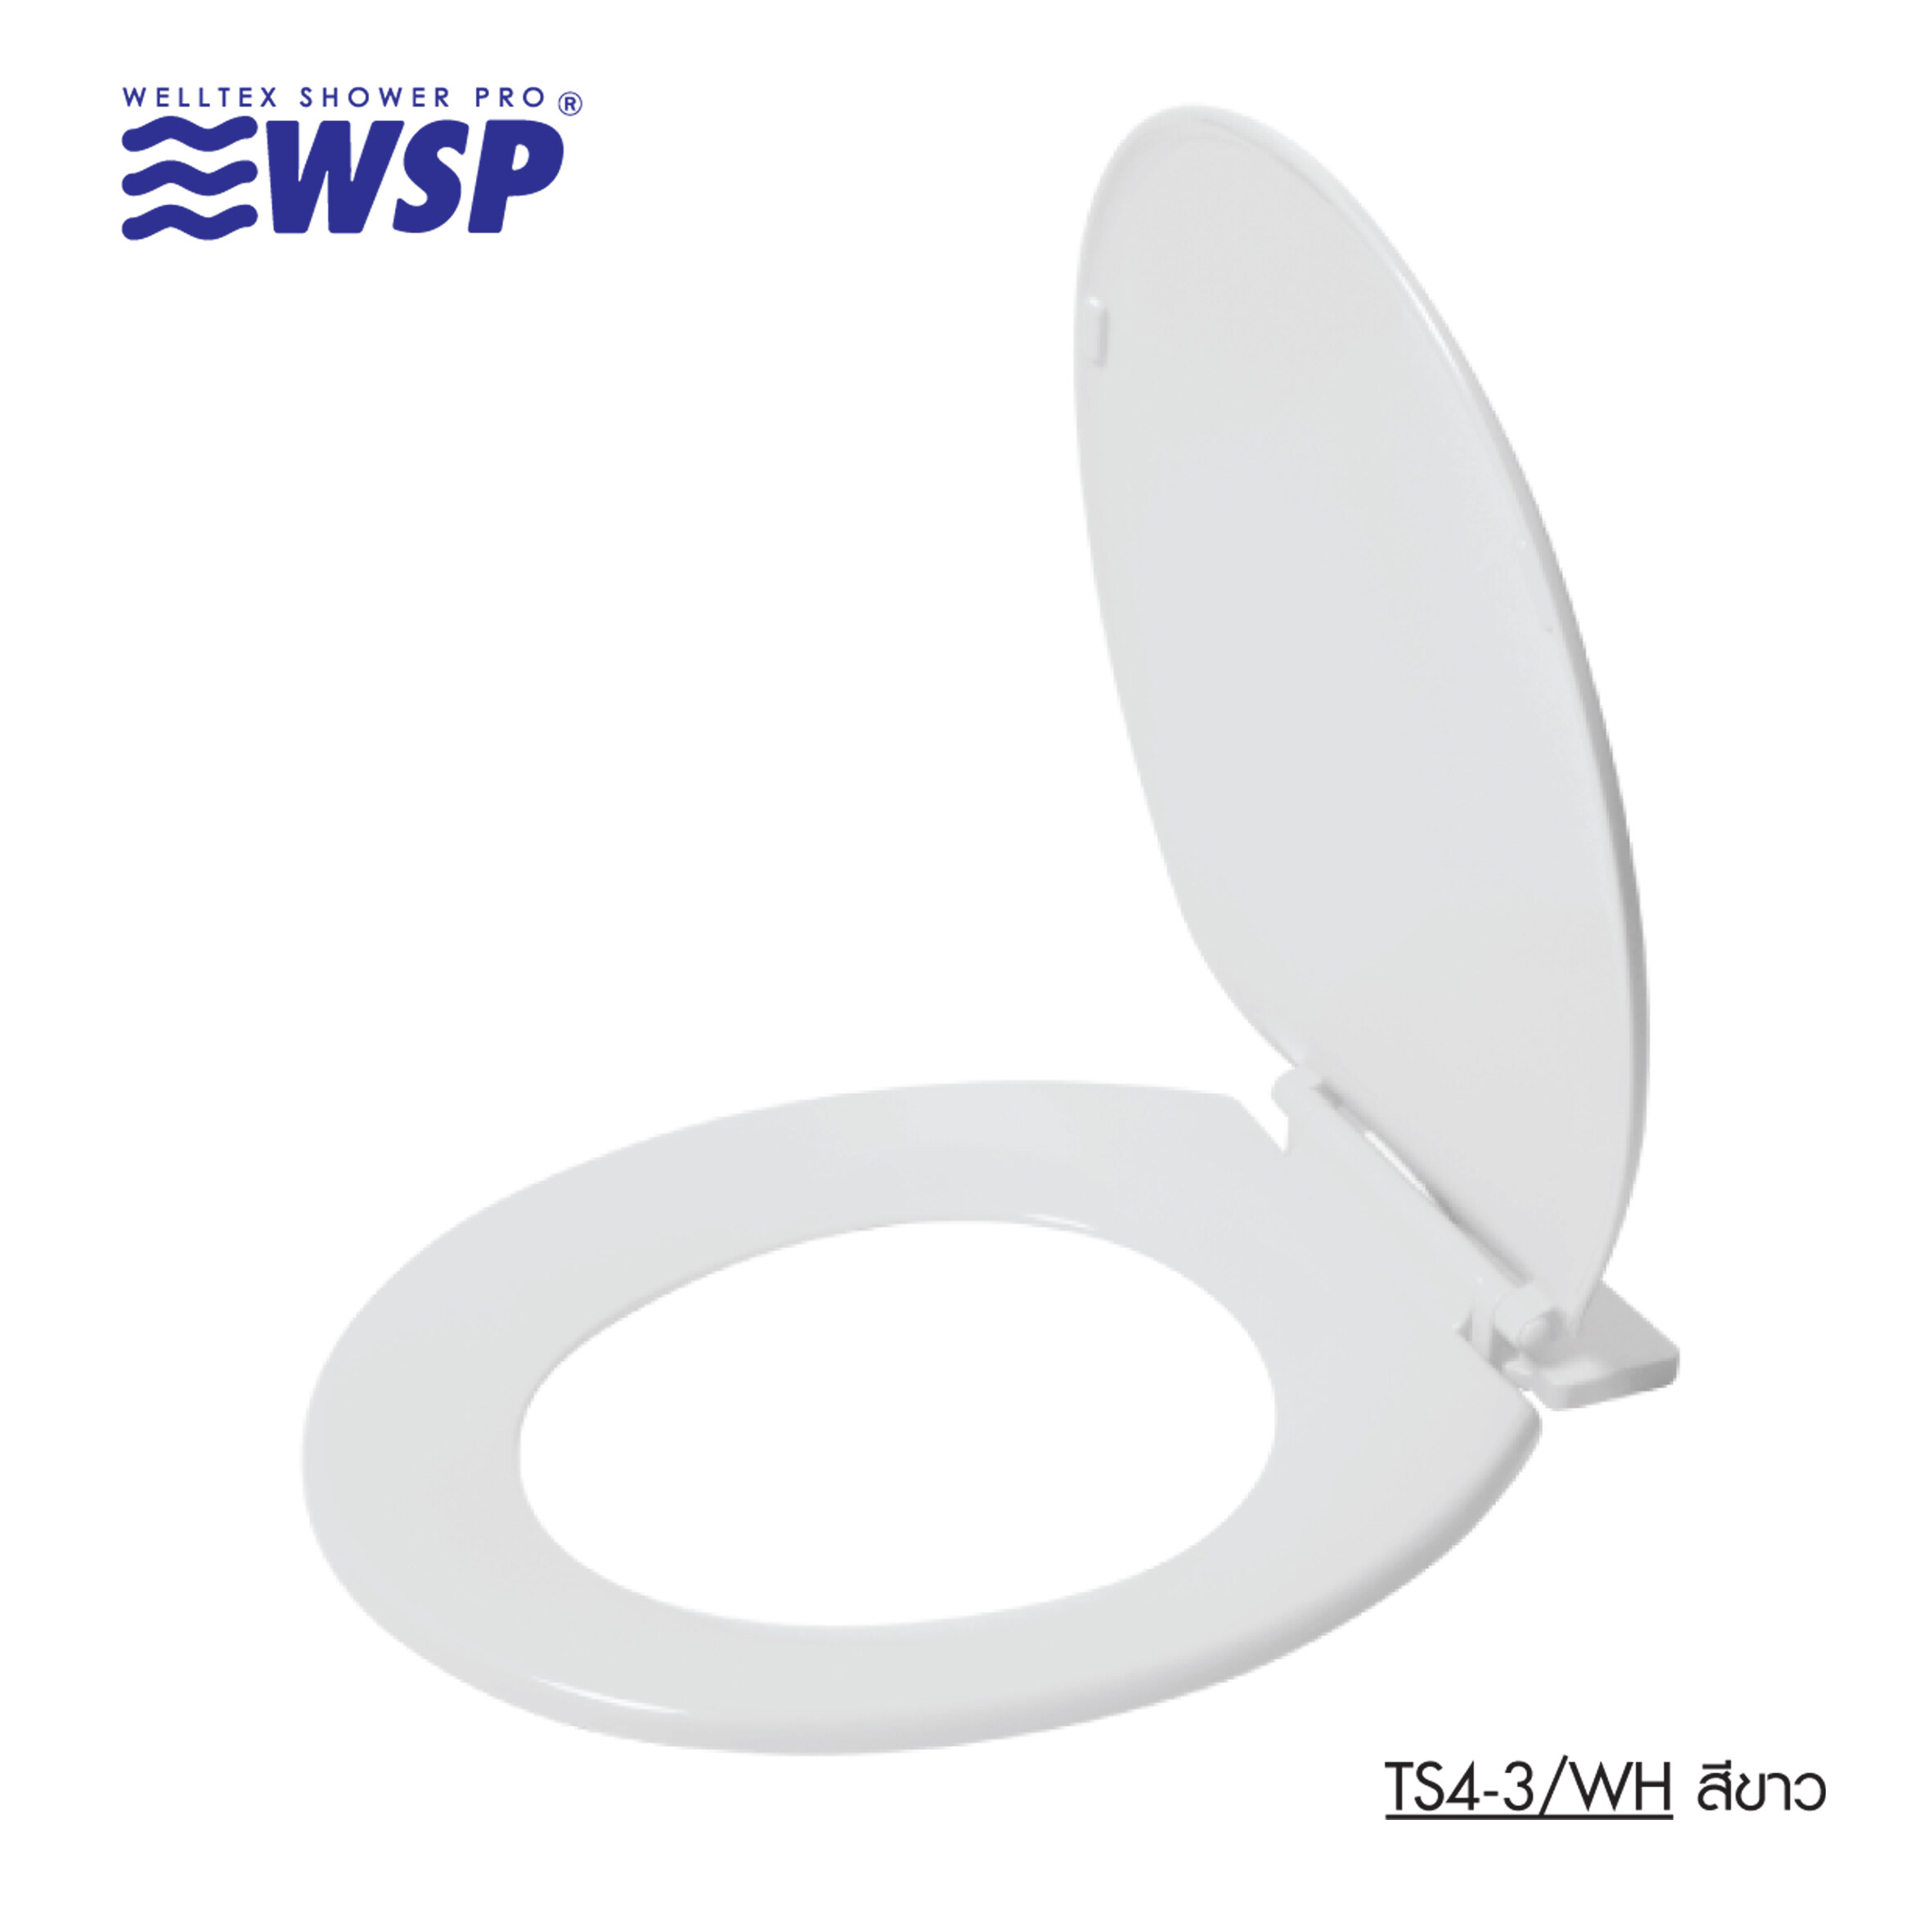 WSP ฝารองนั่งชักโครกพลาสติกทรงกลม สีขาว รุ่น TS4-3/WH